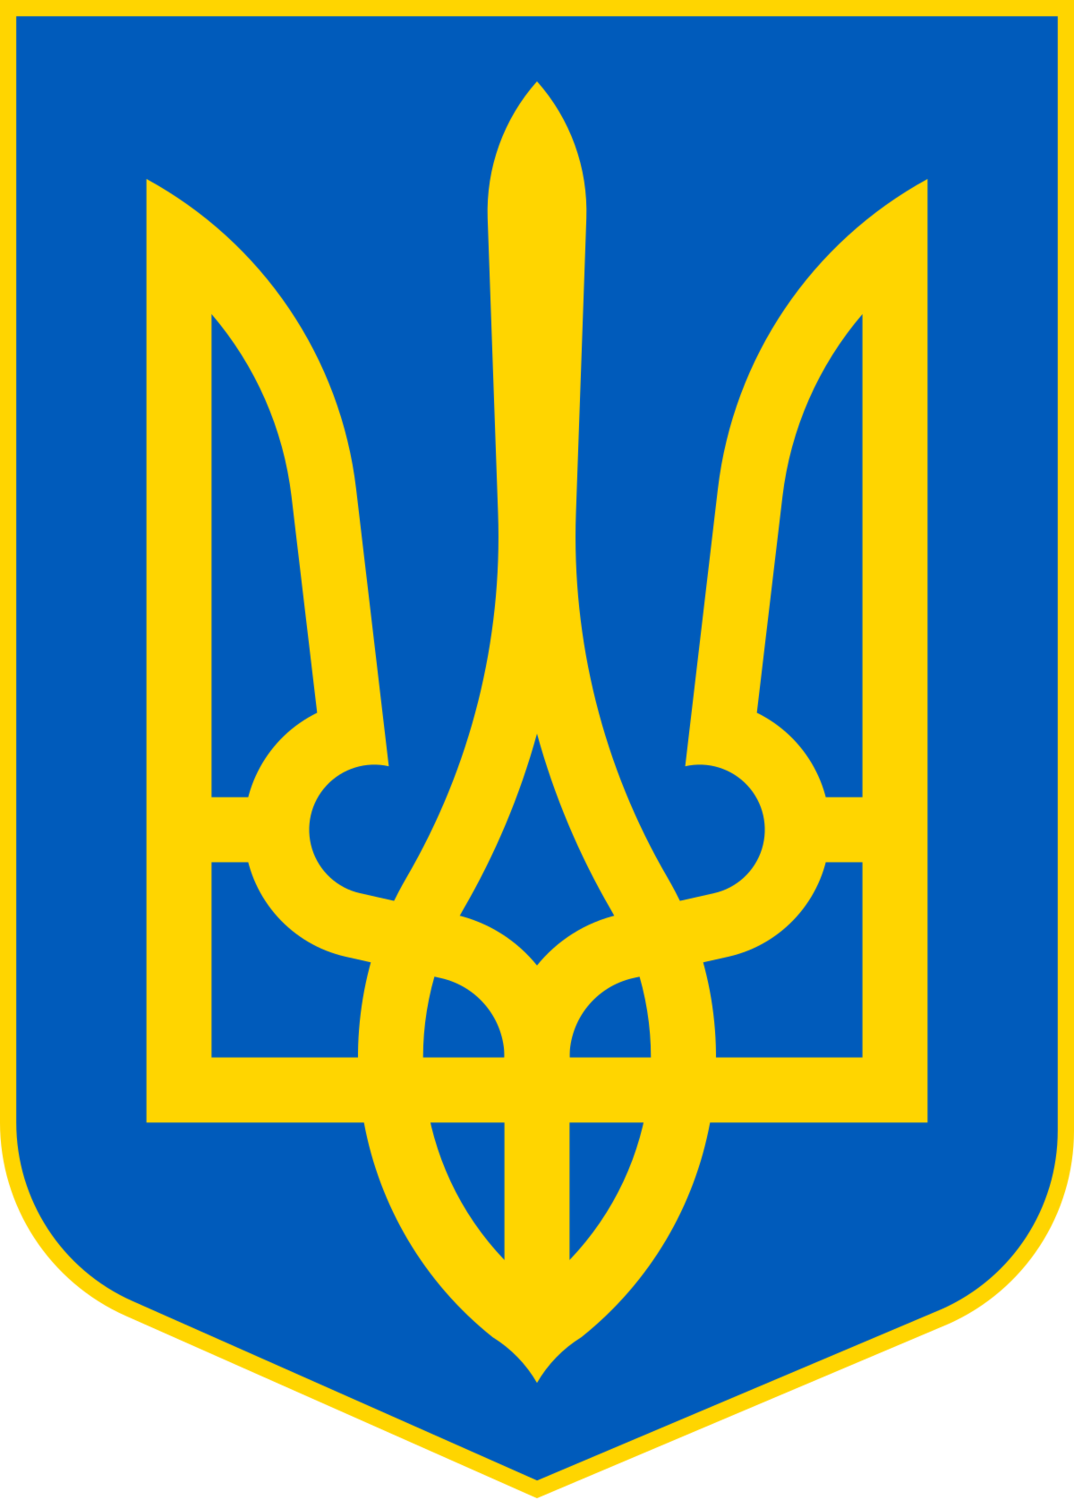 Ukraine coat of arms